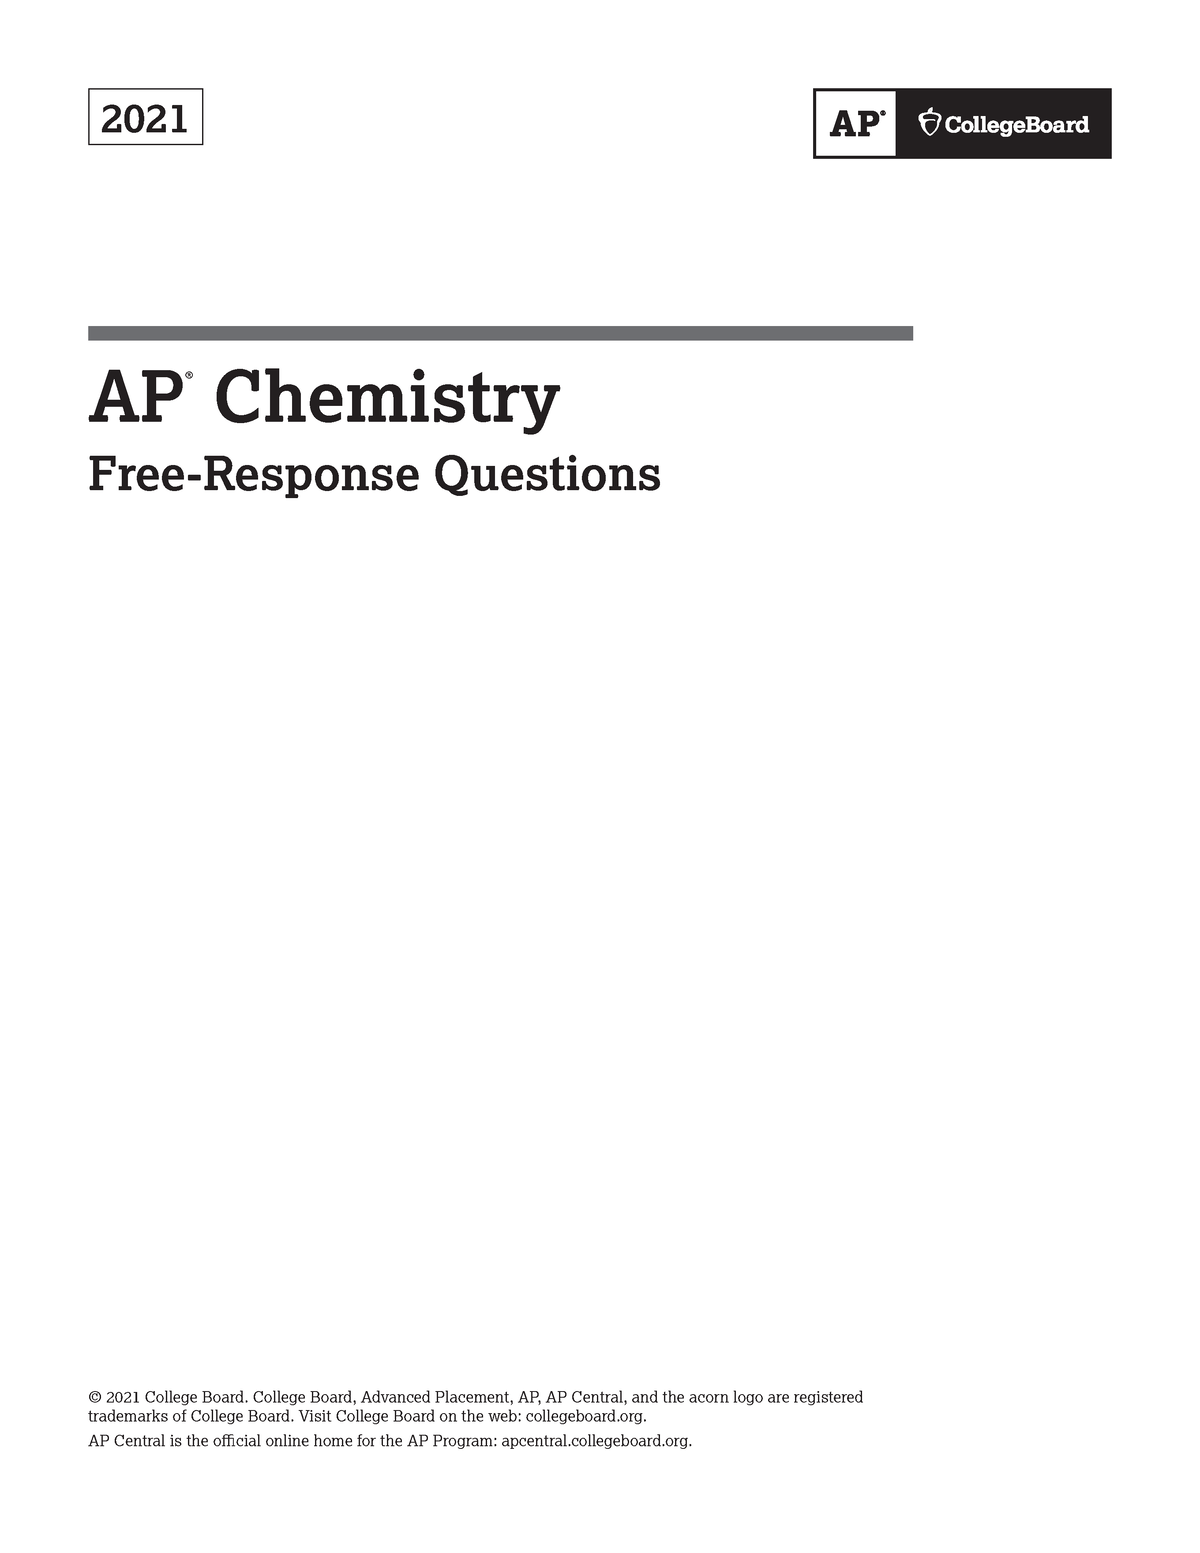 Ap21frqchemistry 2021 AP ® Chemistry FreeResponse Questions